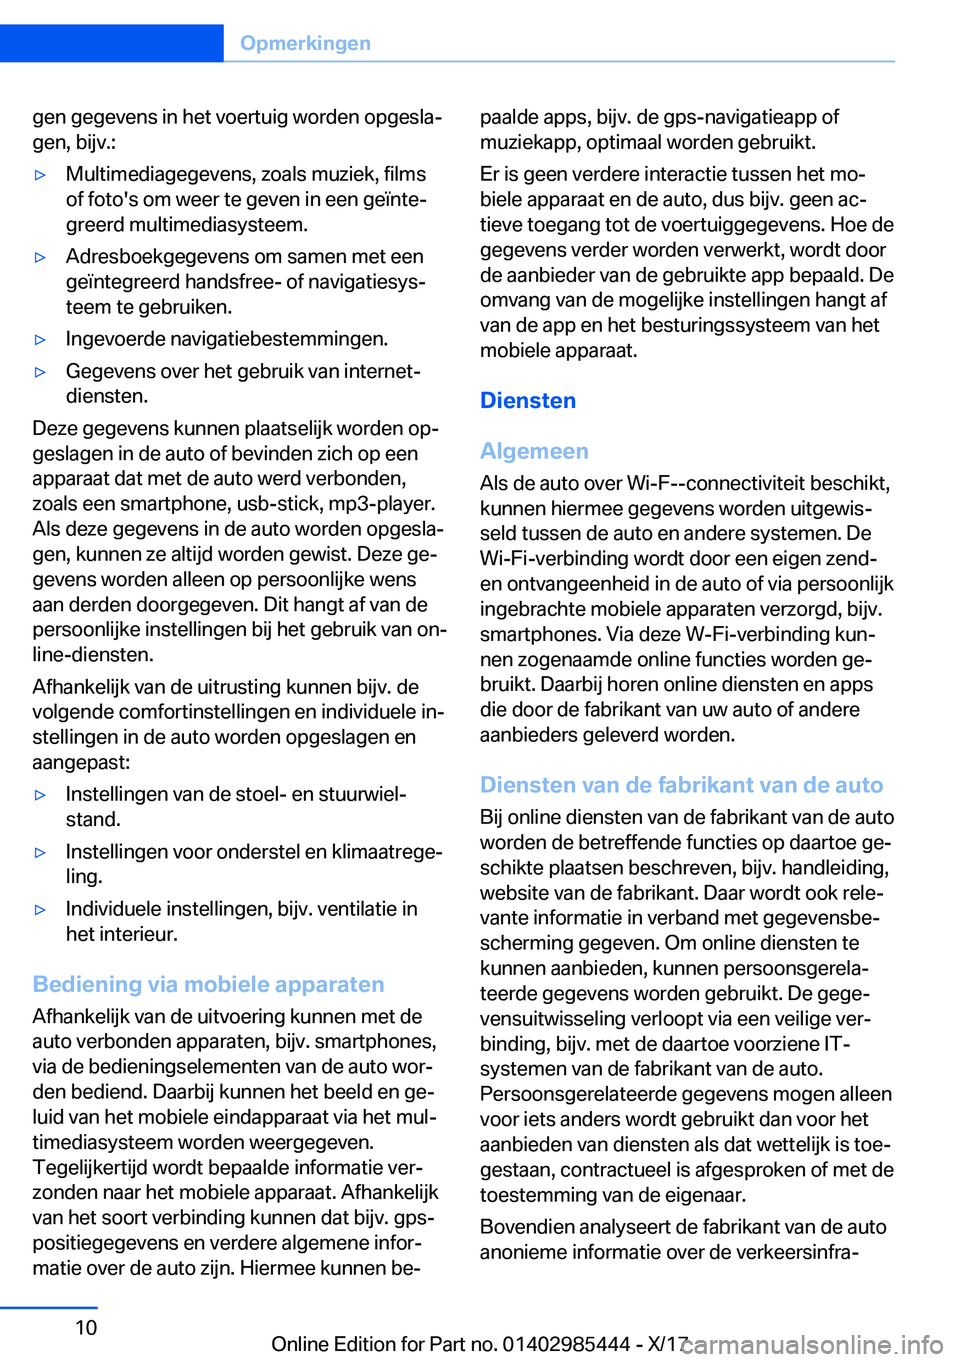 BMW X1 2018  Instructieboekjes (in Dutch) �g�e�n� �g�e�g�e�v�e�n�s� �i�n� �h�e�t� �v�o�e�r�t�u�i�g� �w�o�r�d�e�n� �o�p�g�e�s�l�aj�g�e�n�,� �b�i�j�v�.�:'y�M�u�l�t�i�m�e�d�i�a�g�e�g�e�v�e�n�s�,� �z�o�a�l�s� �m�u�z�i�e�k�,� �f�i�l�m�s
�o�f�